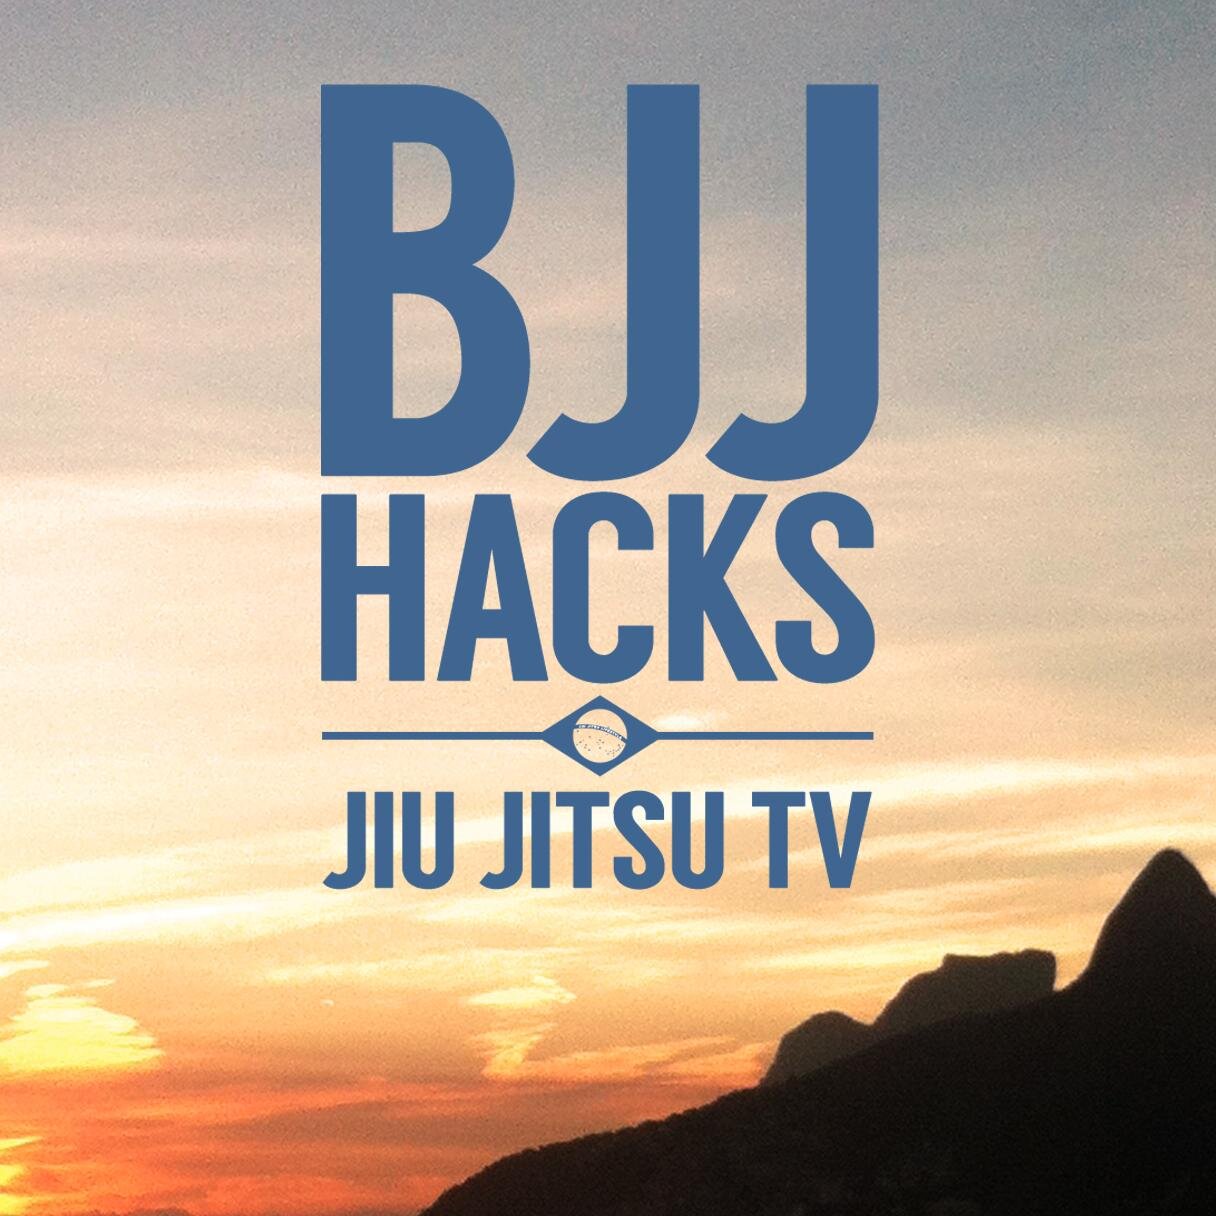 Jiu-Jitsu media made to inspire. Promoting the art since 2011. Get connected 👇
https://t.co/9IEBaUNWlO